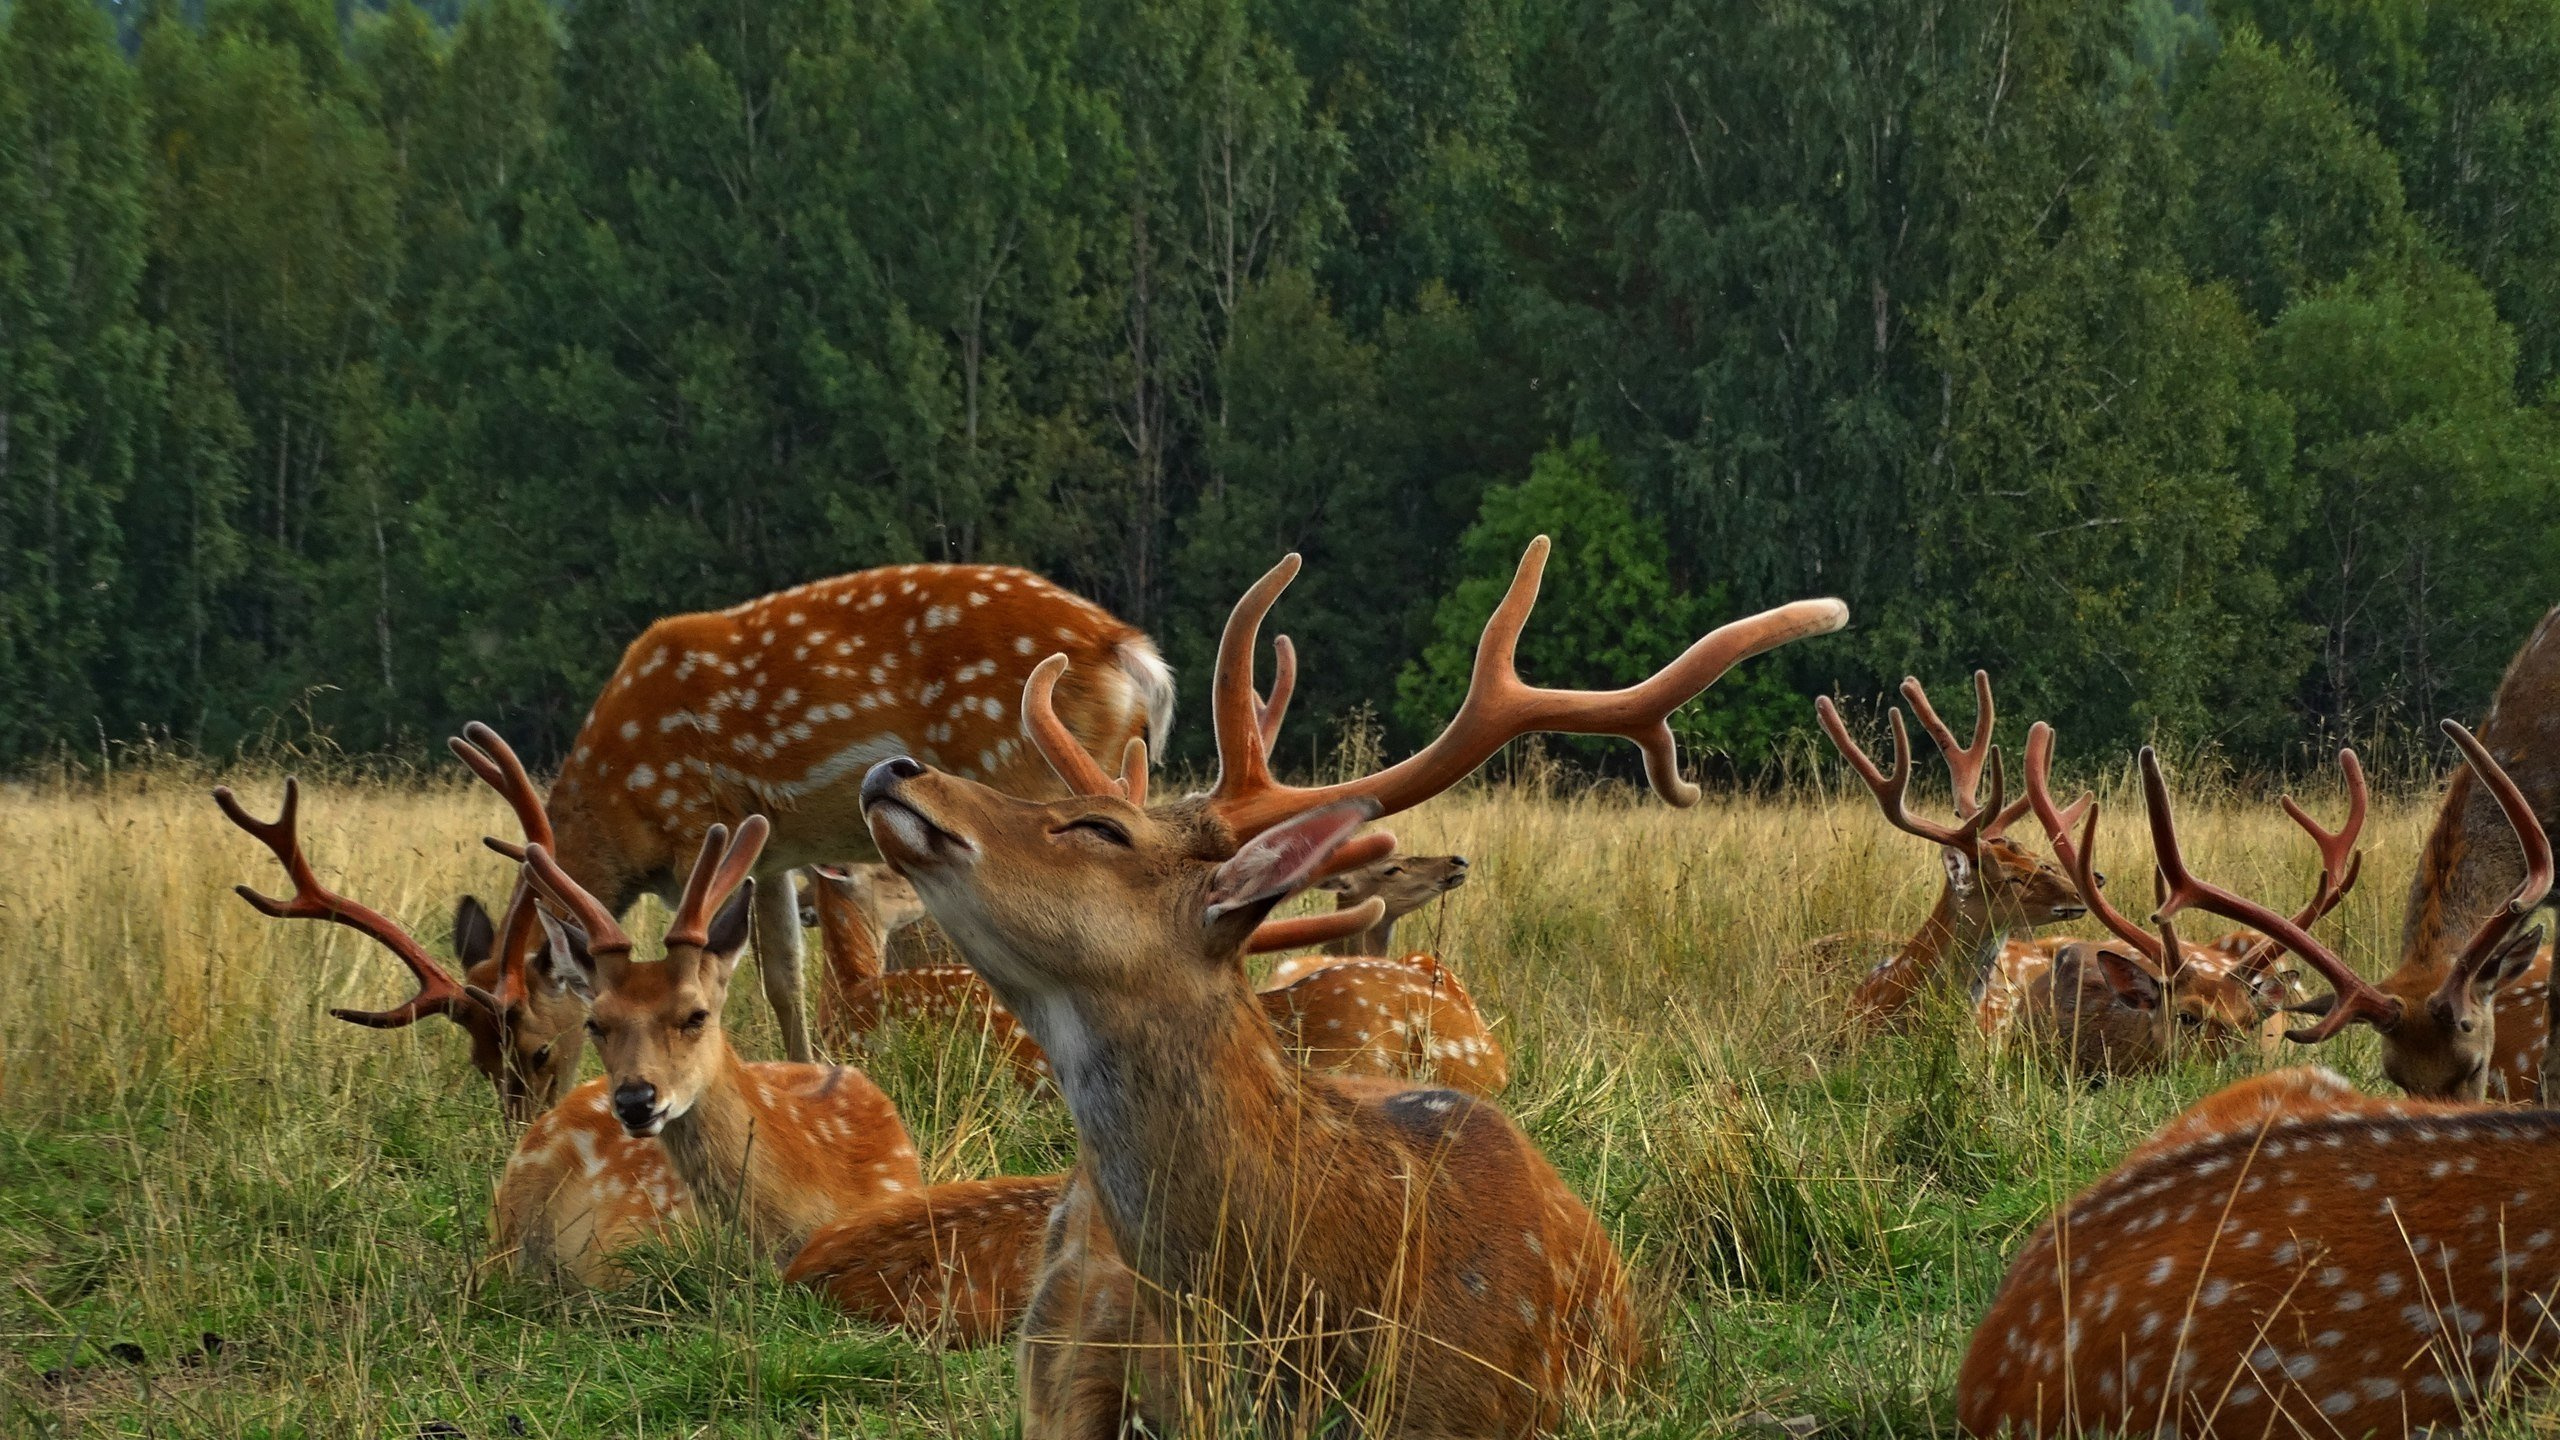 Brown Deer on Green Grass Field During Daytime. Wallpaper in 2560x1440 Resolution